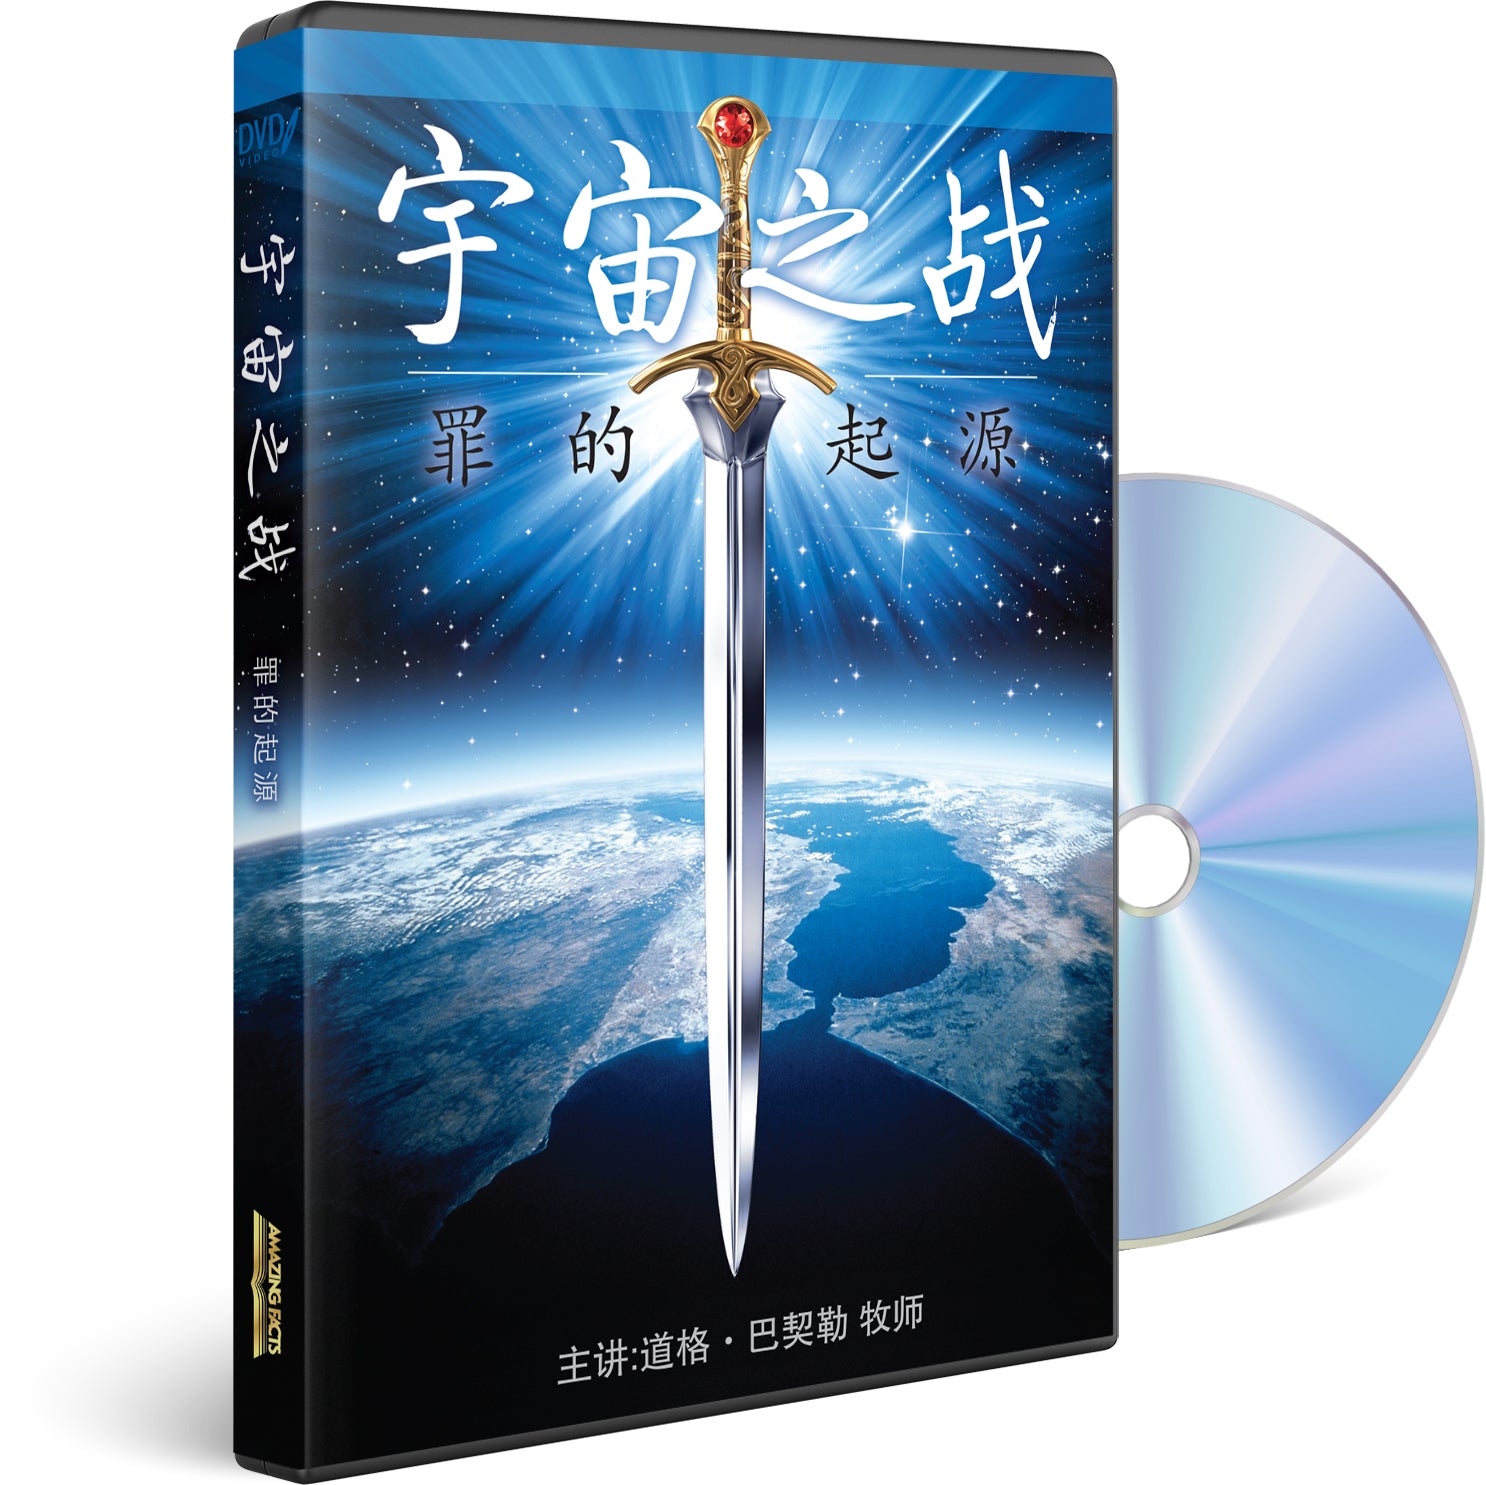 Cosmic Conflict: The Origin of Evil (Mandarin) by Doug Batchelor